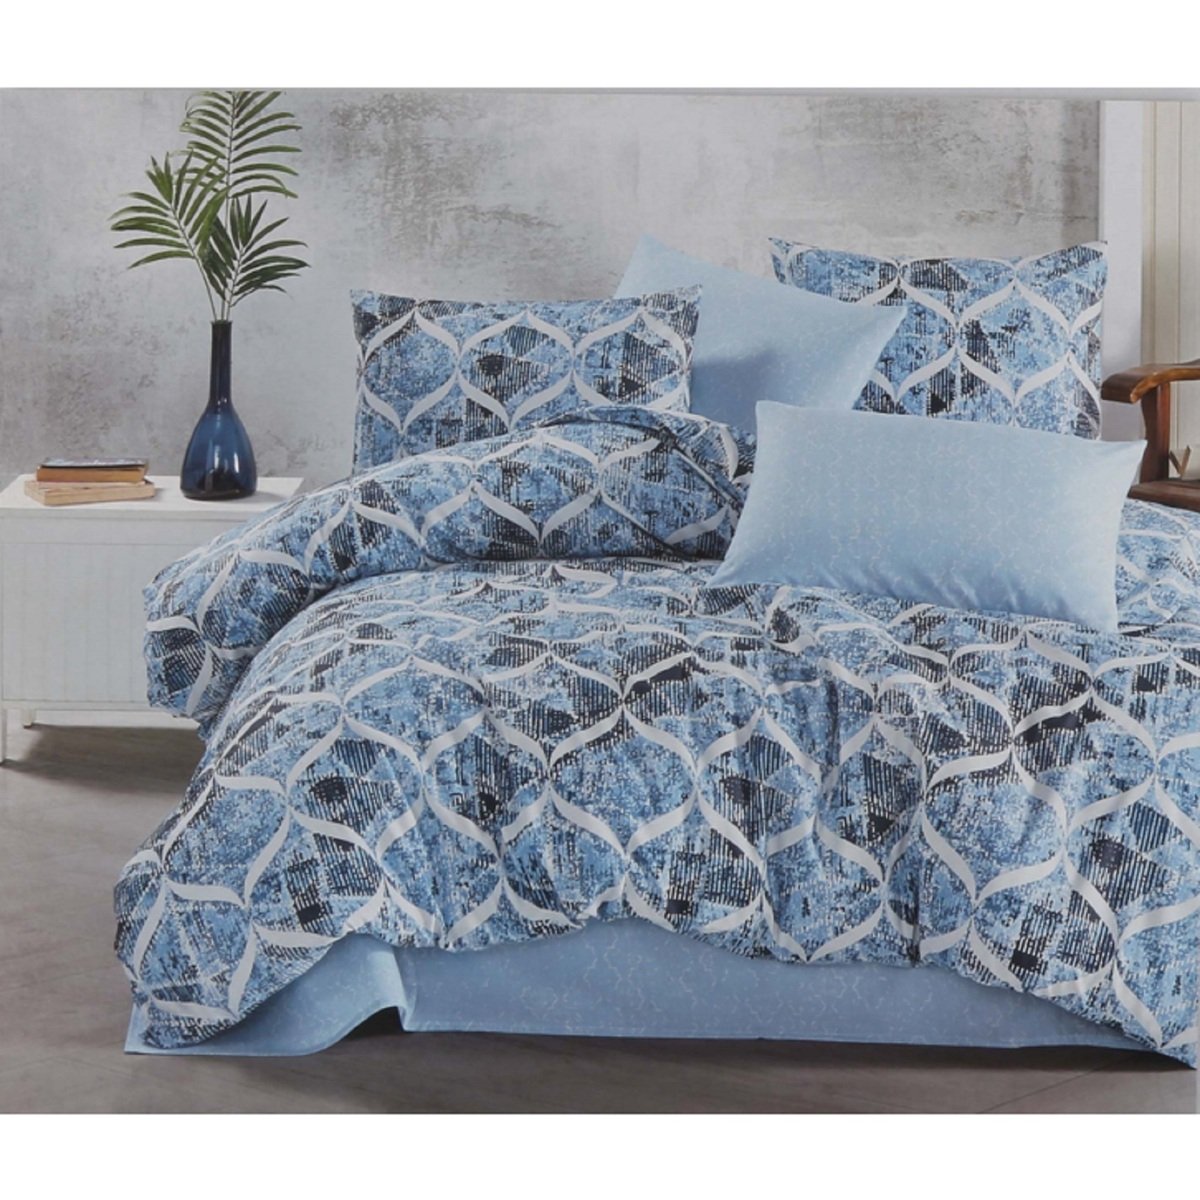 Cortigiani 4pcs Comforter Set 230x260cm Assorted